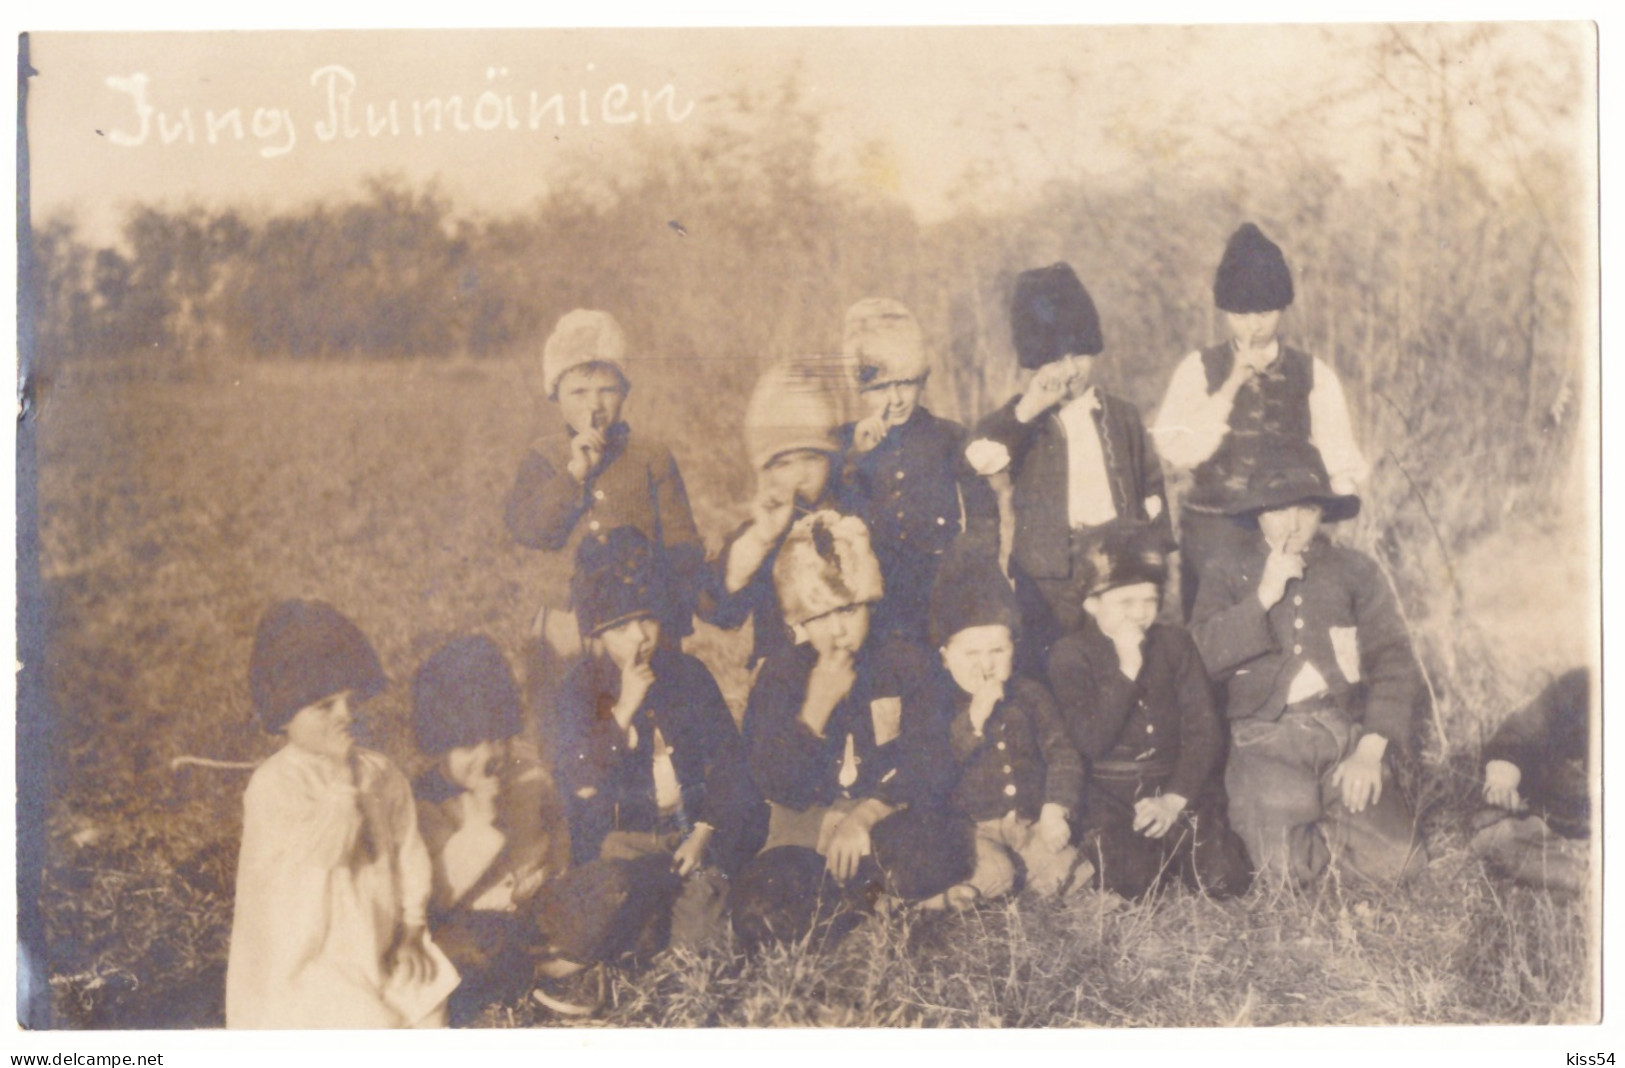 RO 38 - 21135 ETHNIC, Children, Romania - Old Postcard, Real Photo - Unused - Roumanie